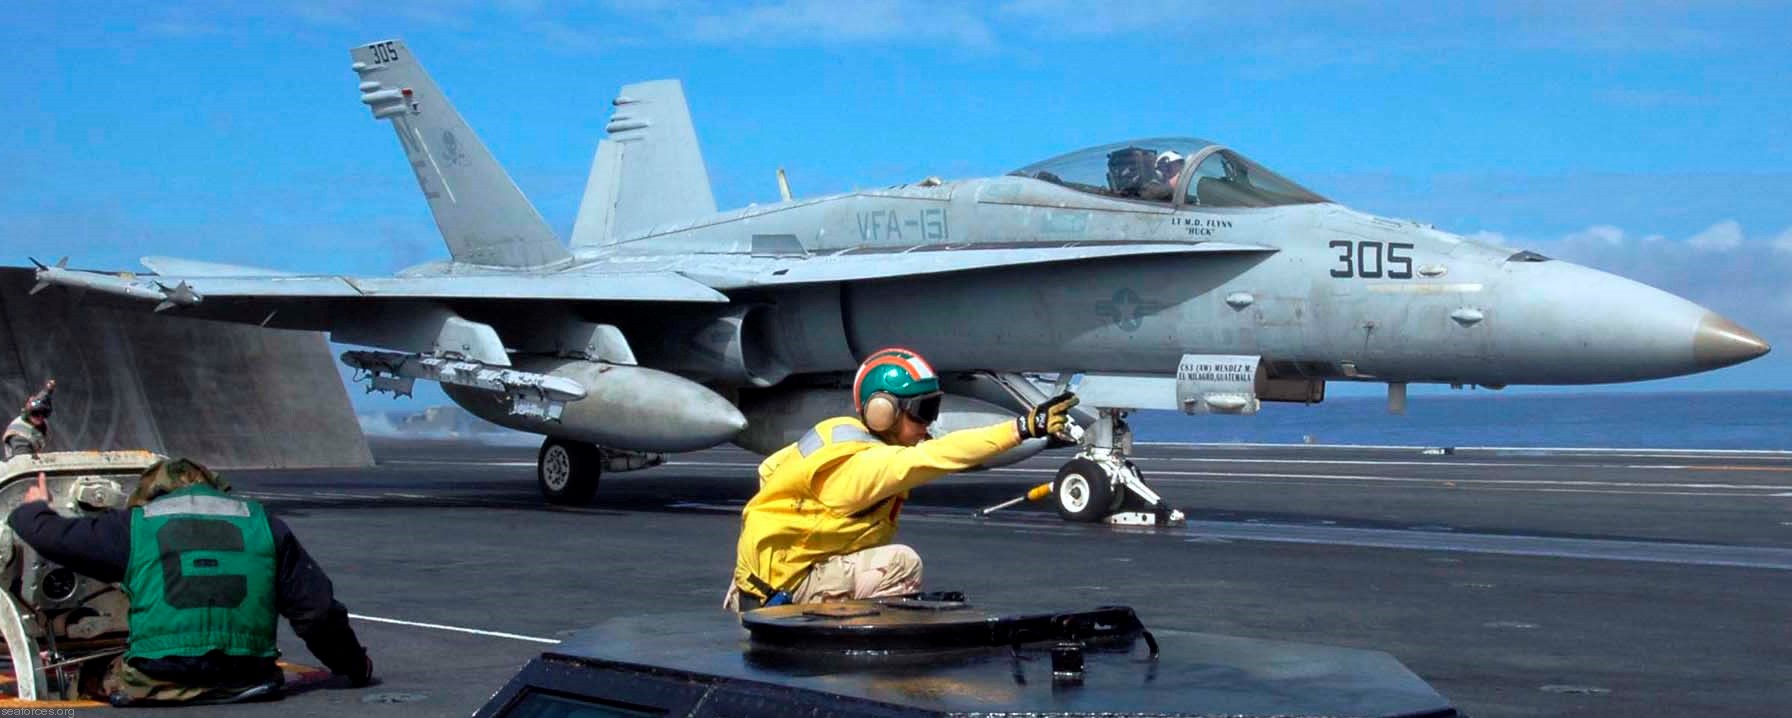 vfa-151 vigilantes strike fighter squadron navy f/a-18c hornet carrier air wing cvw-2 uss abraham lincoln cvn-72 65